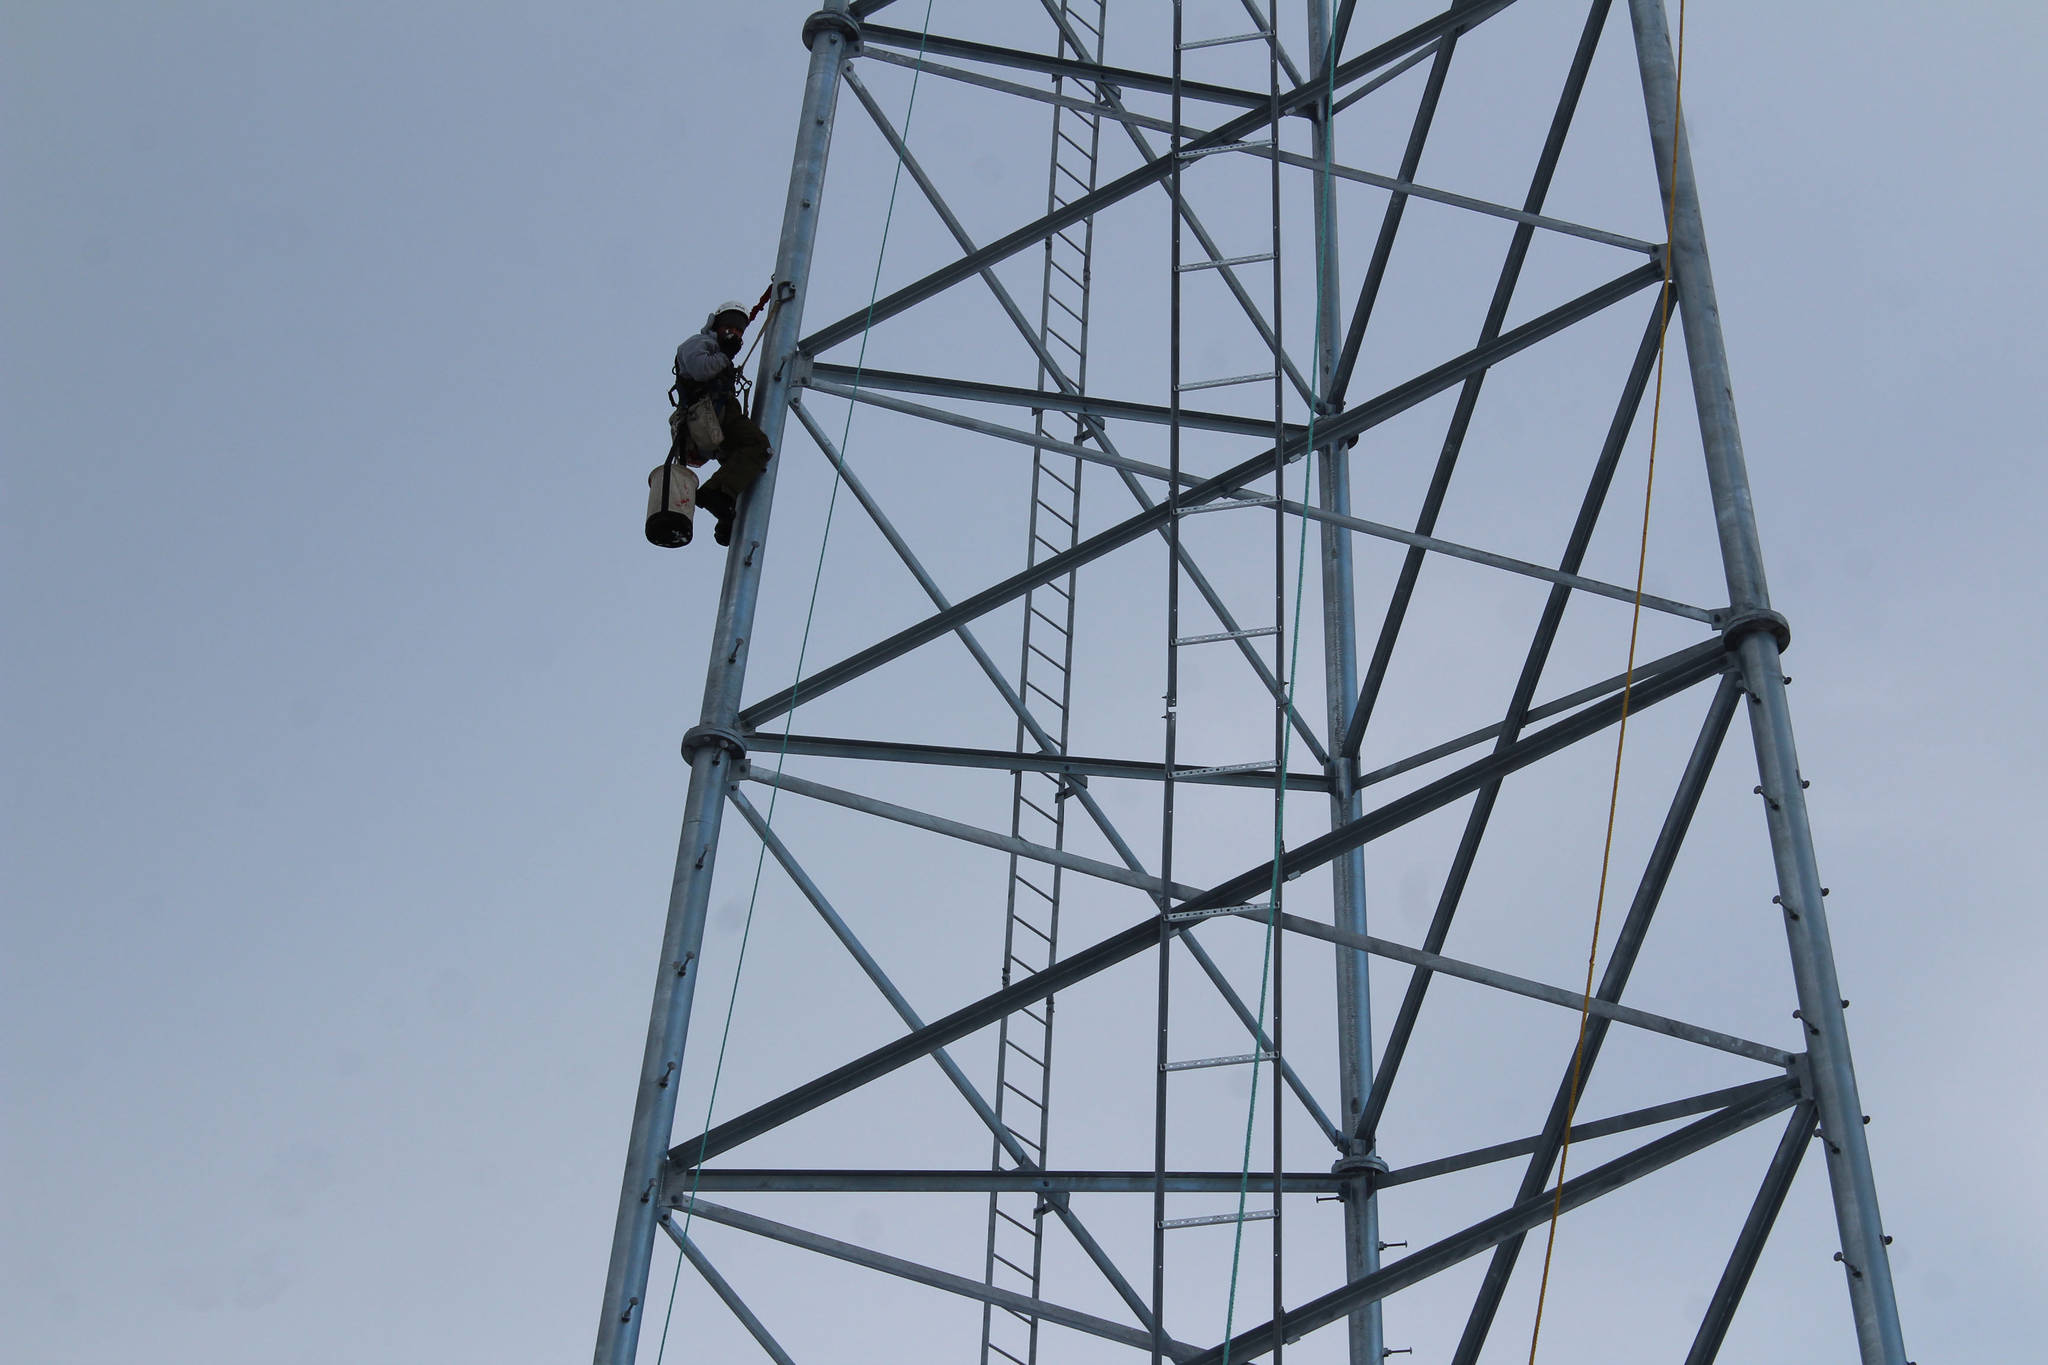 Billy Adamson scales a communications tower on Thursday, Jan. 7 in Nikiski, Alaska. (Ashlyn O’Hara/Peninsula Clarion)